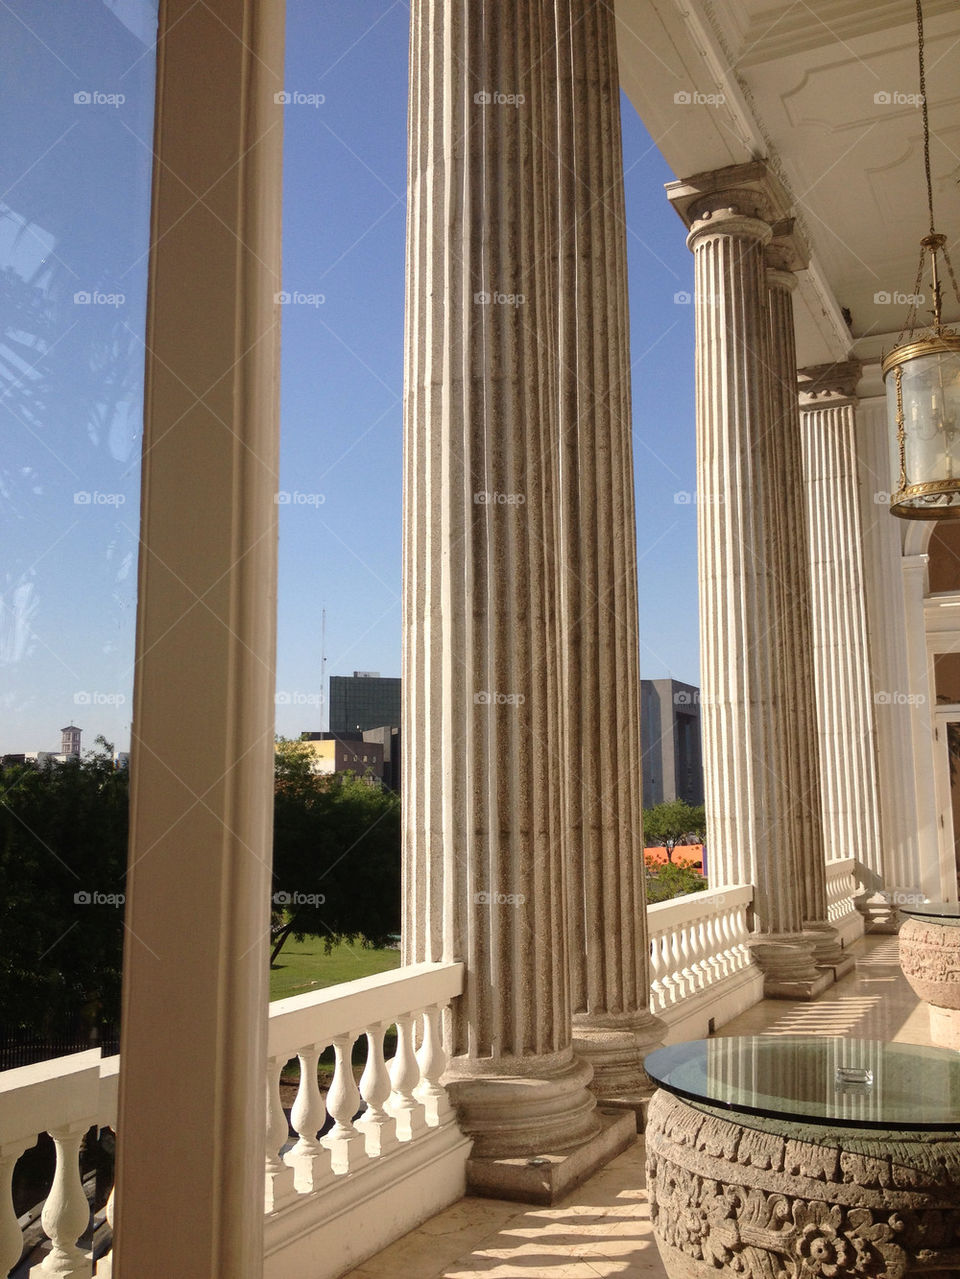 Balcony view to green plaza below, column details